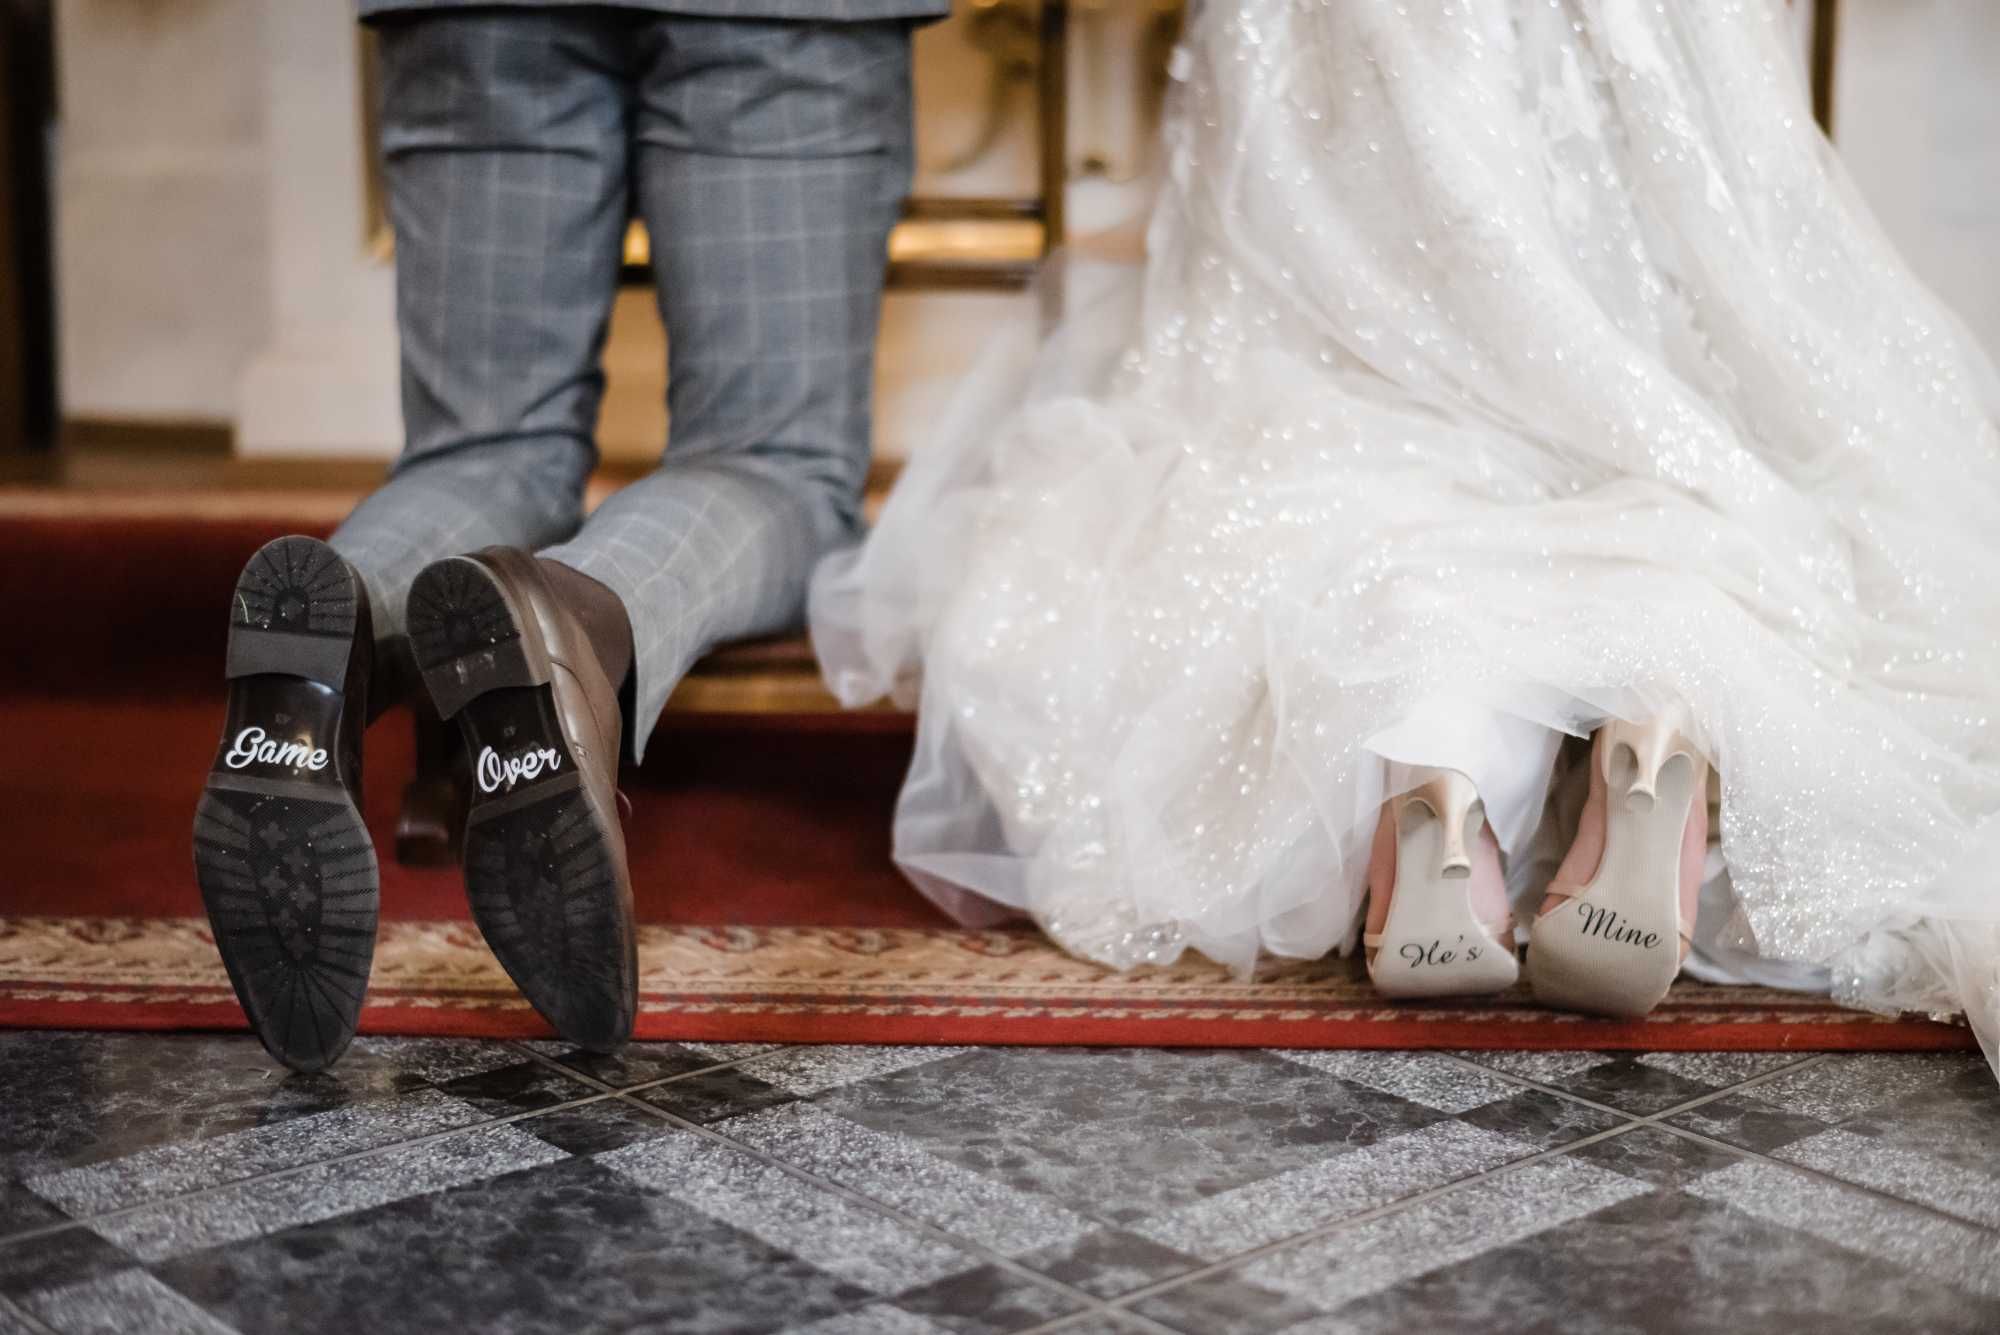 Naklejka ślubna np na buty she’s mine mąż żona